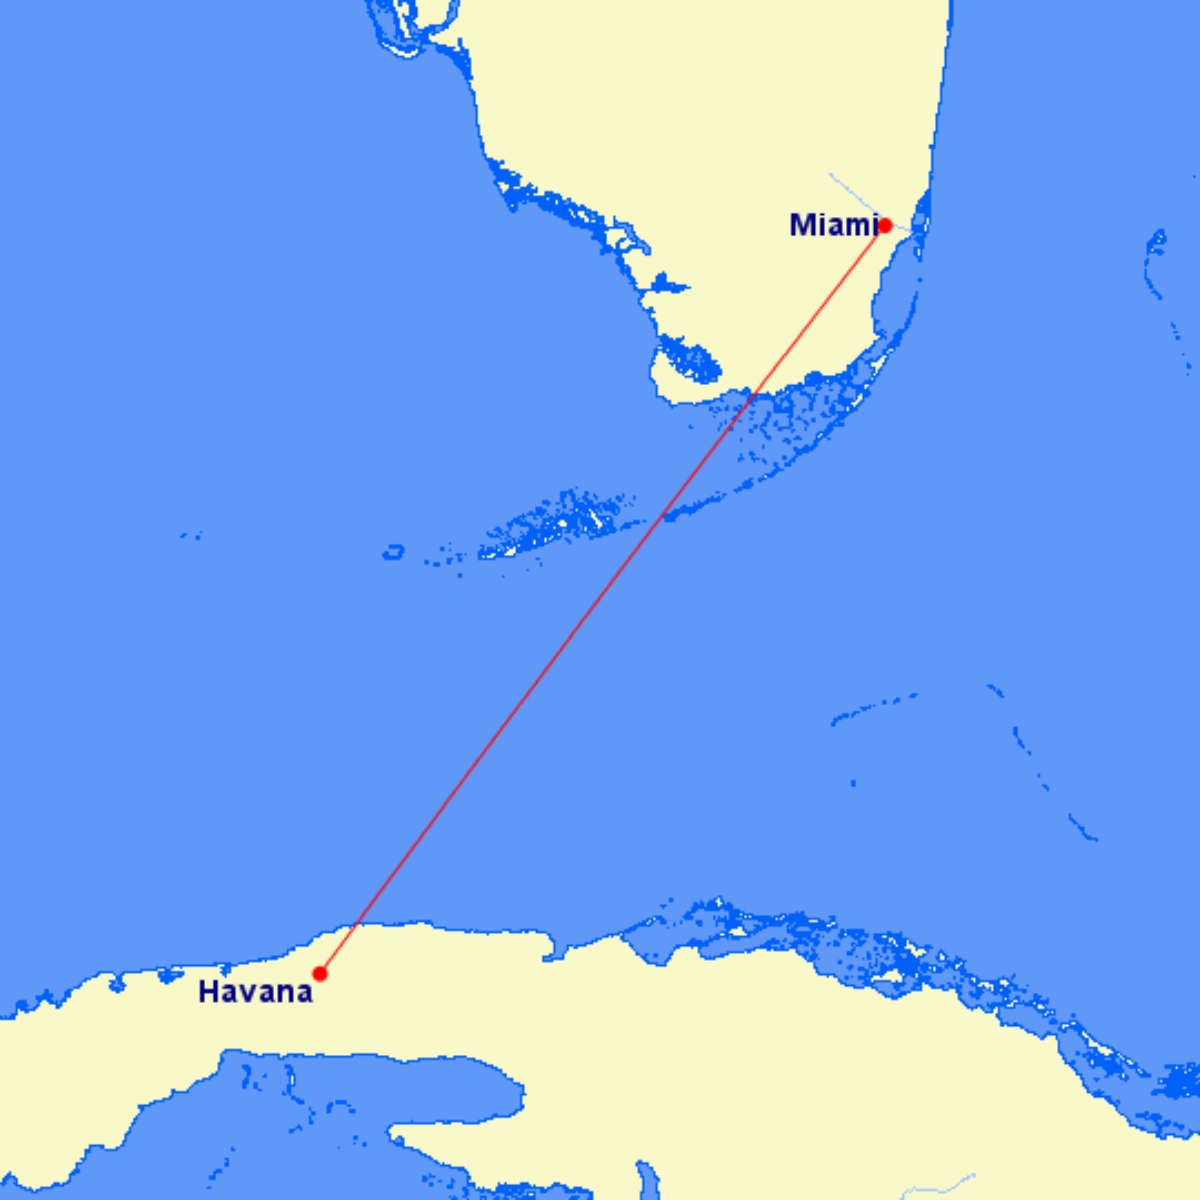 Miami - havana Route